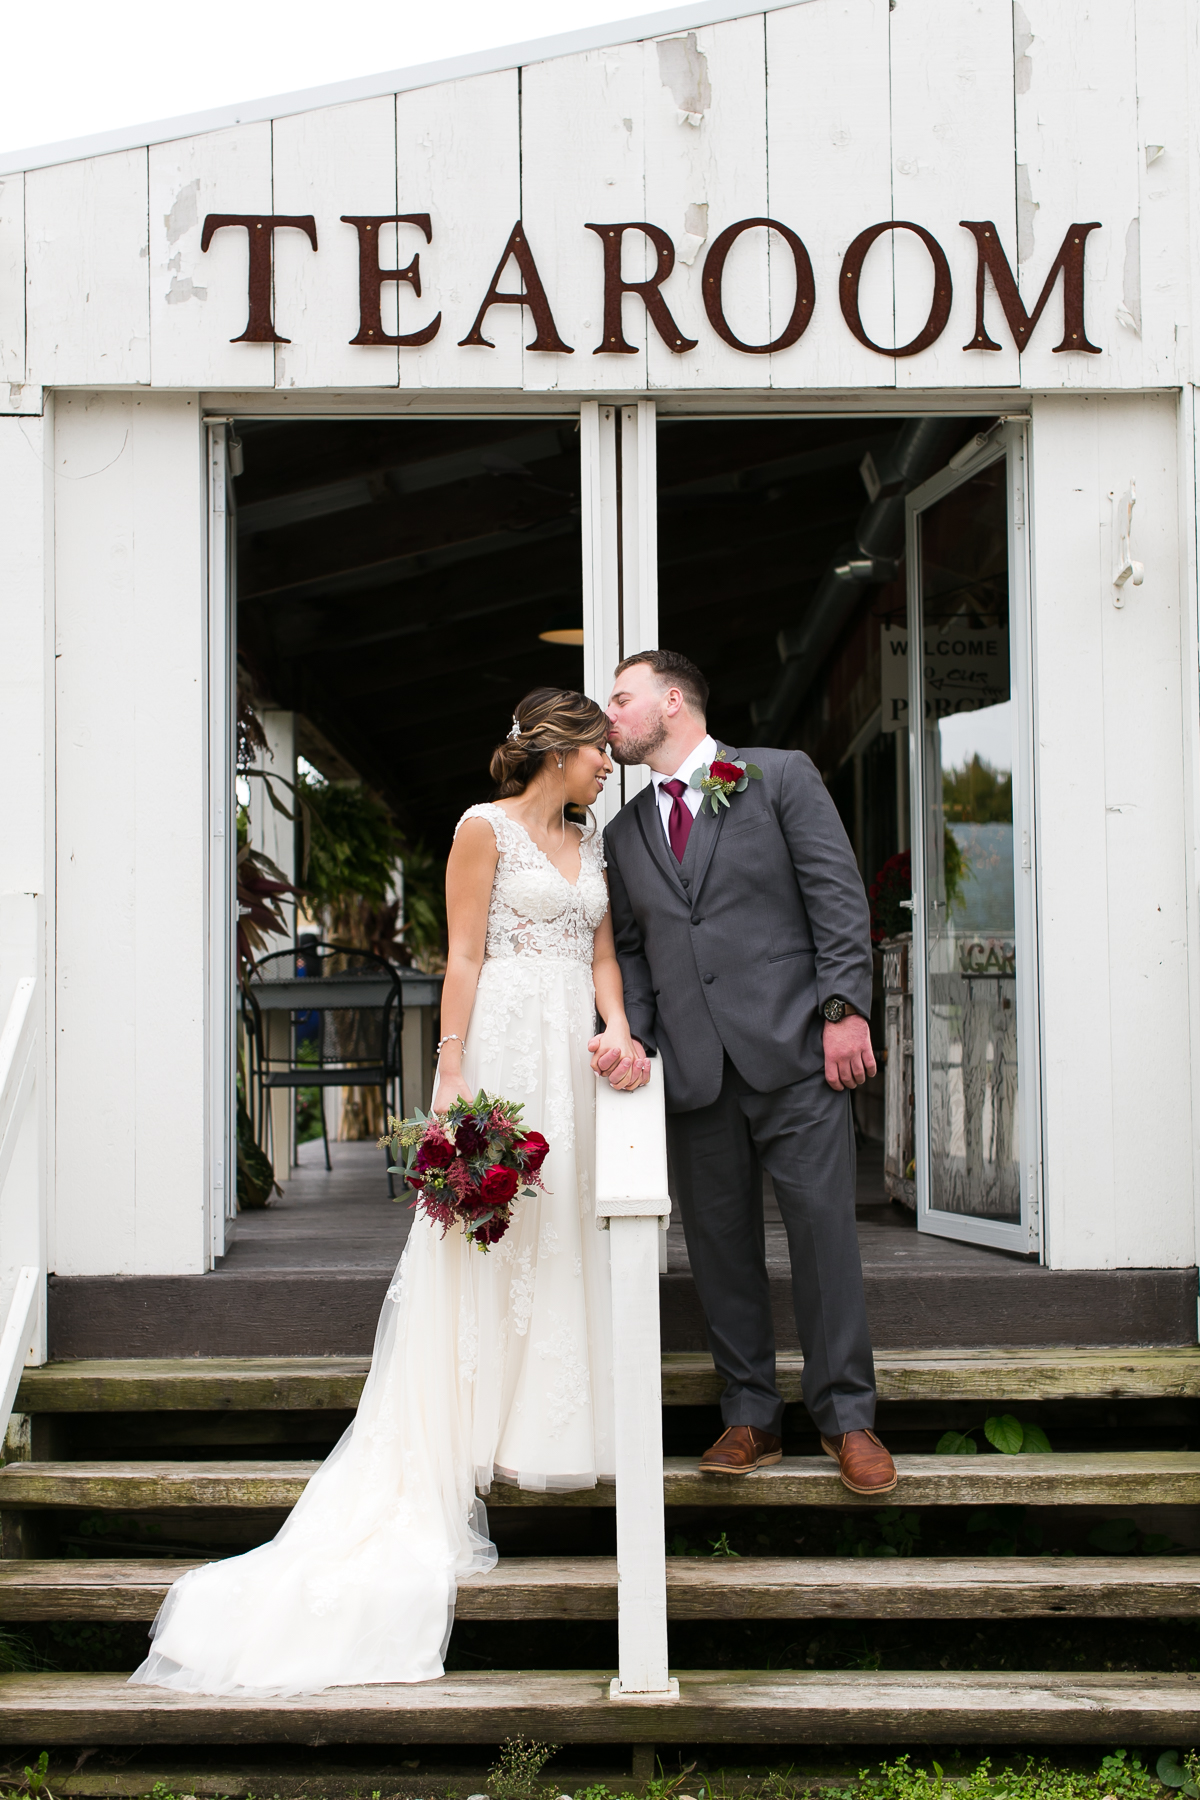 Emerson Creek Pottery and Tearoom Wedding Photographer